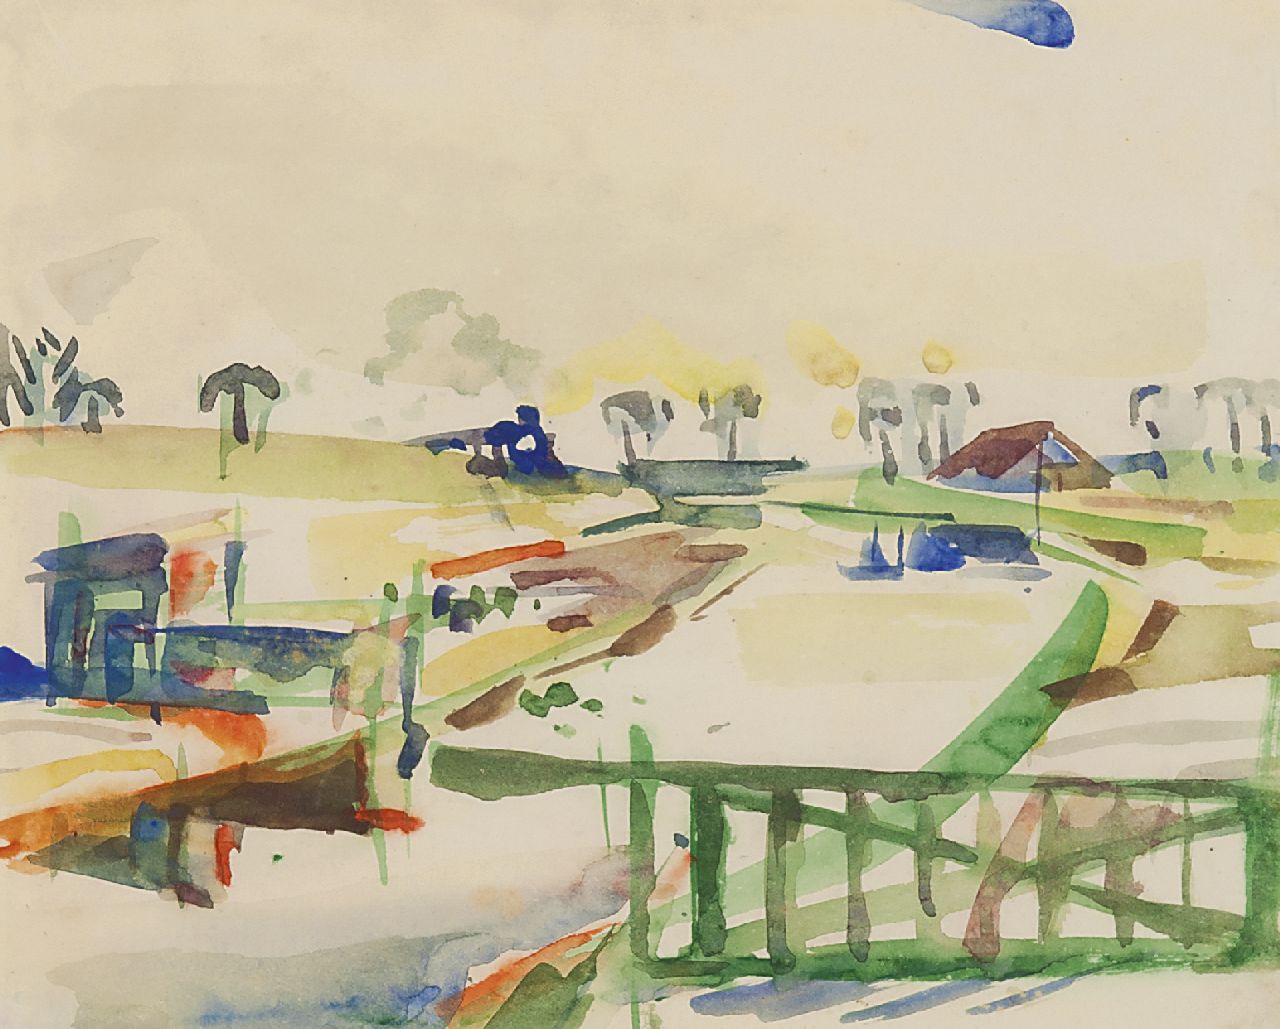 Jordens J.G.  | 'Jan' Gerrit Jordens, Landscape with a farm, watercolour on paper 22.5 x 28.0 cm, signed u.r. and dated 16-3-'53